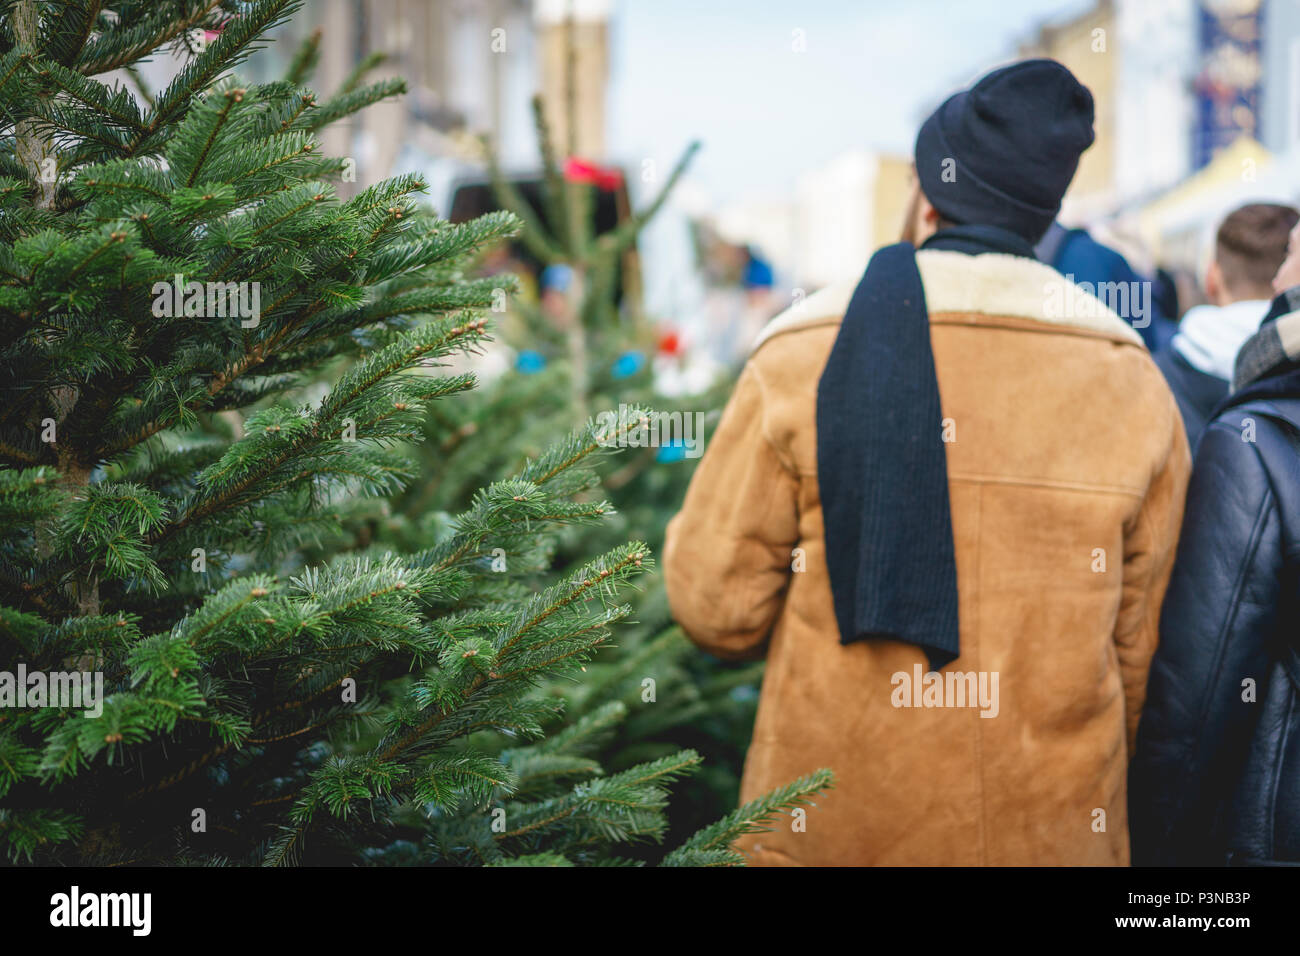 London, UK - December 2017. Christmas trees on sale in Portobello Road in Notting Hill. Stock Photo